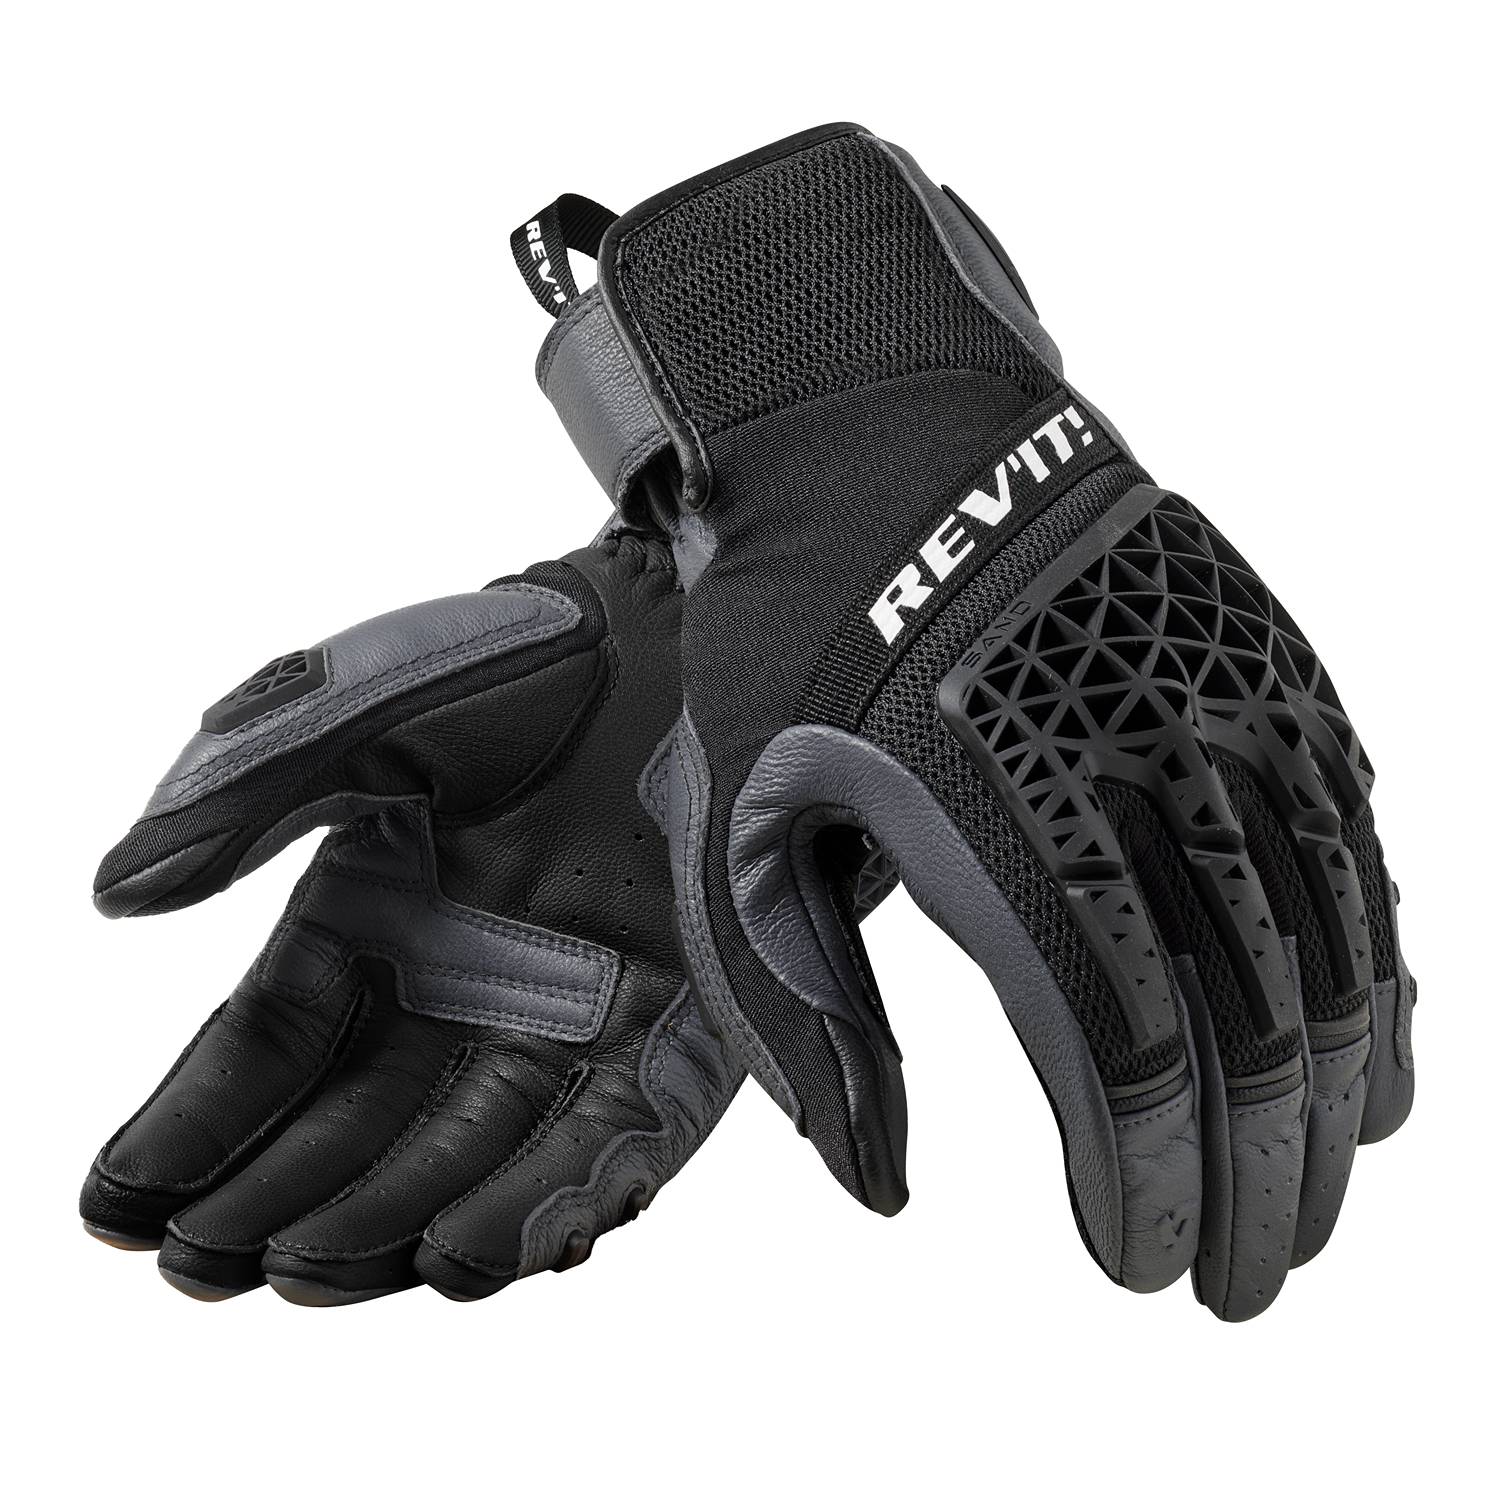 Image of REV'IT! Sand 4 Gloves Gray Black Size 4XL EN